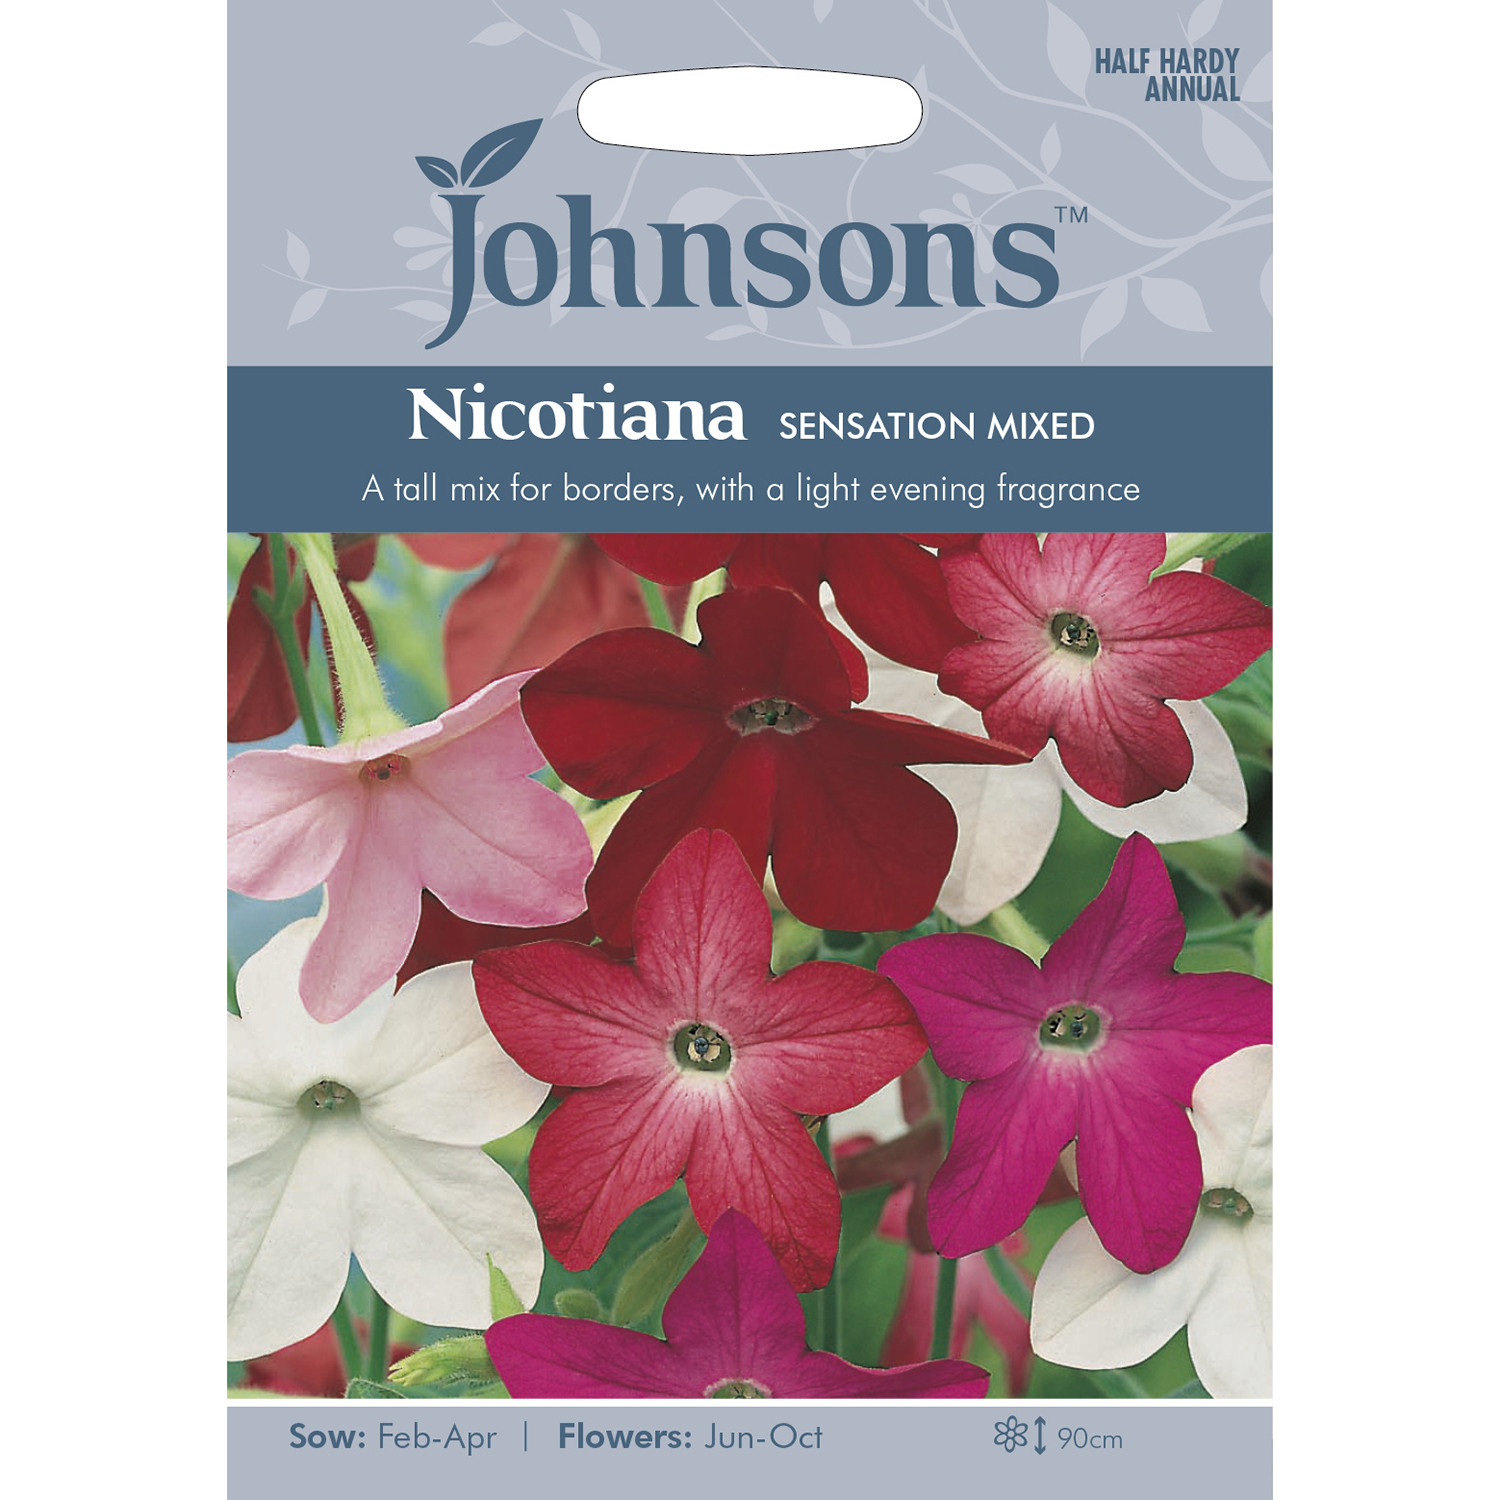 Johnsons Nicotiana Sensation Mixed Flower Seeds Image 2